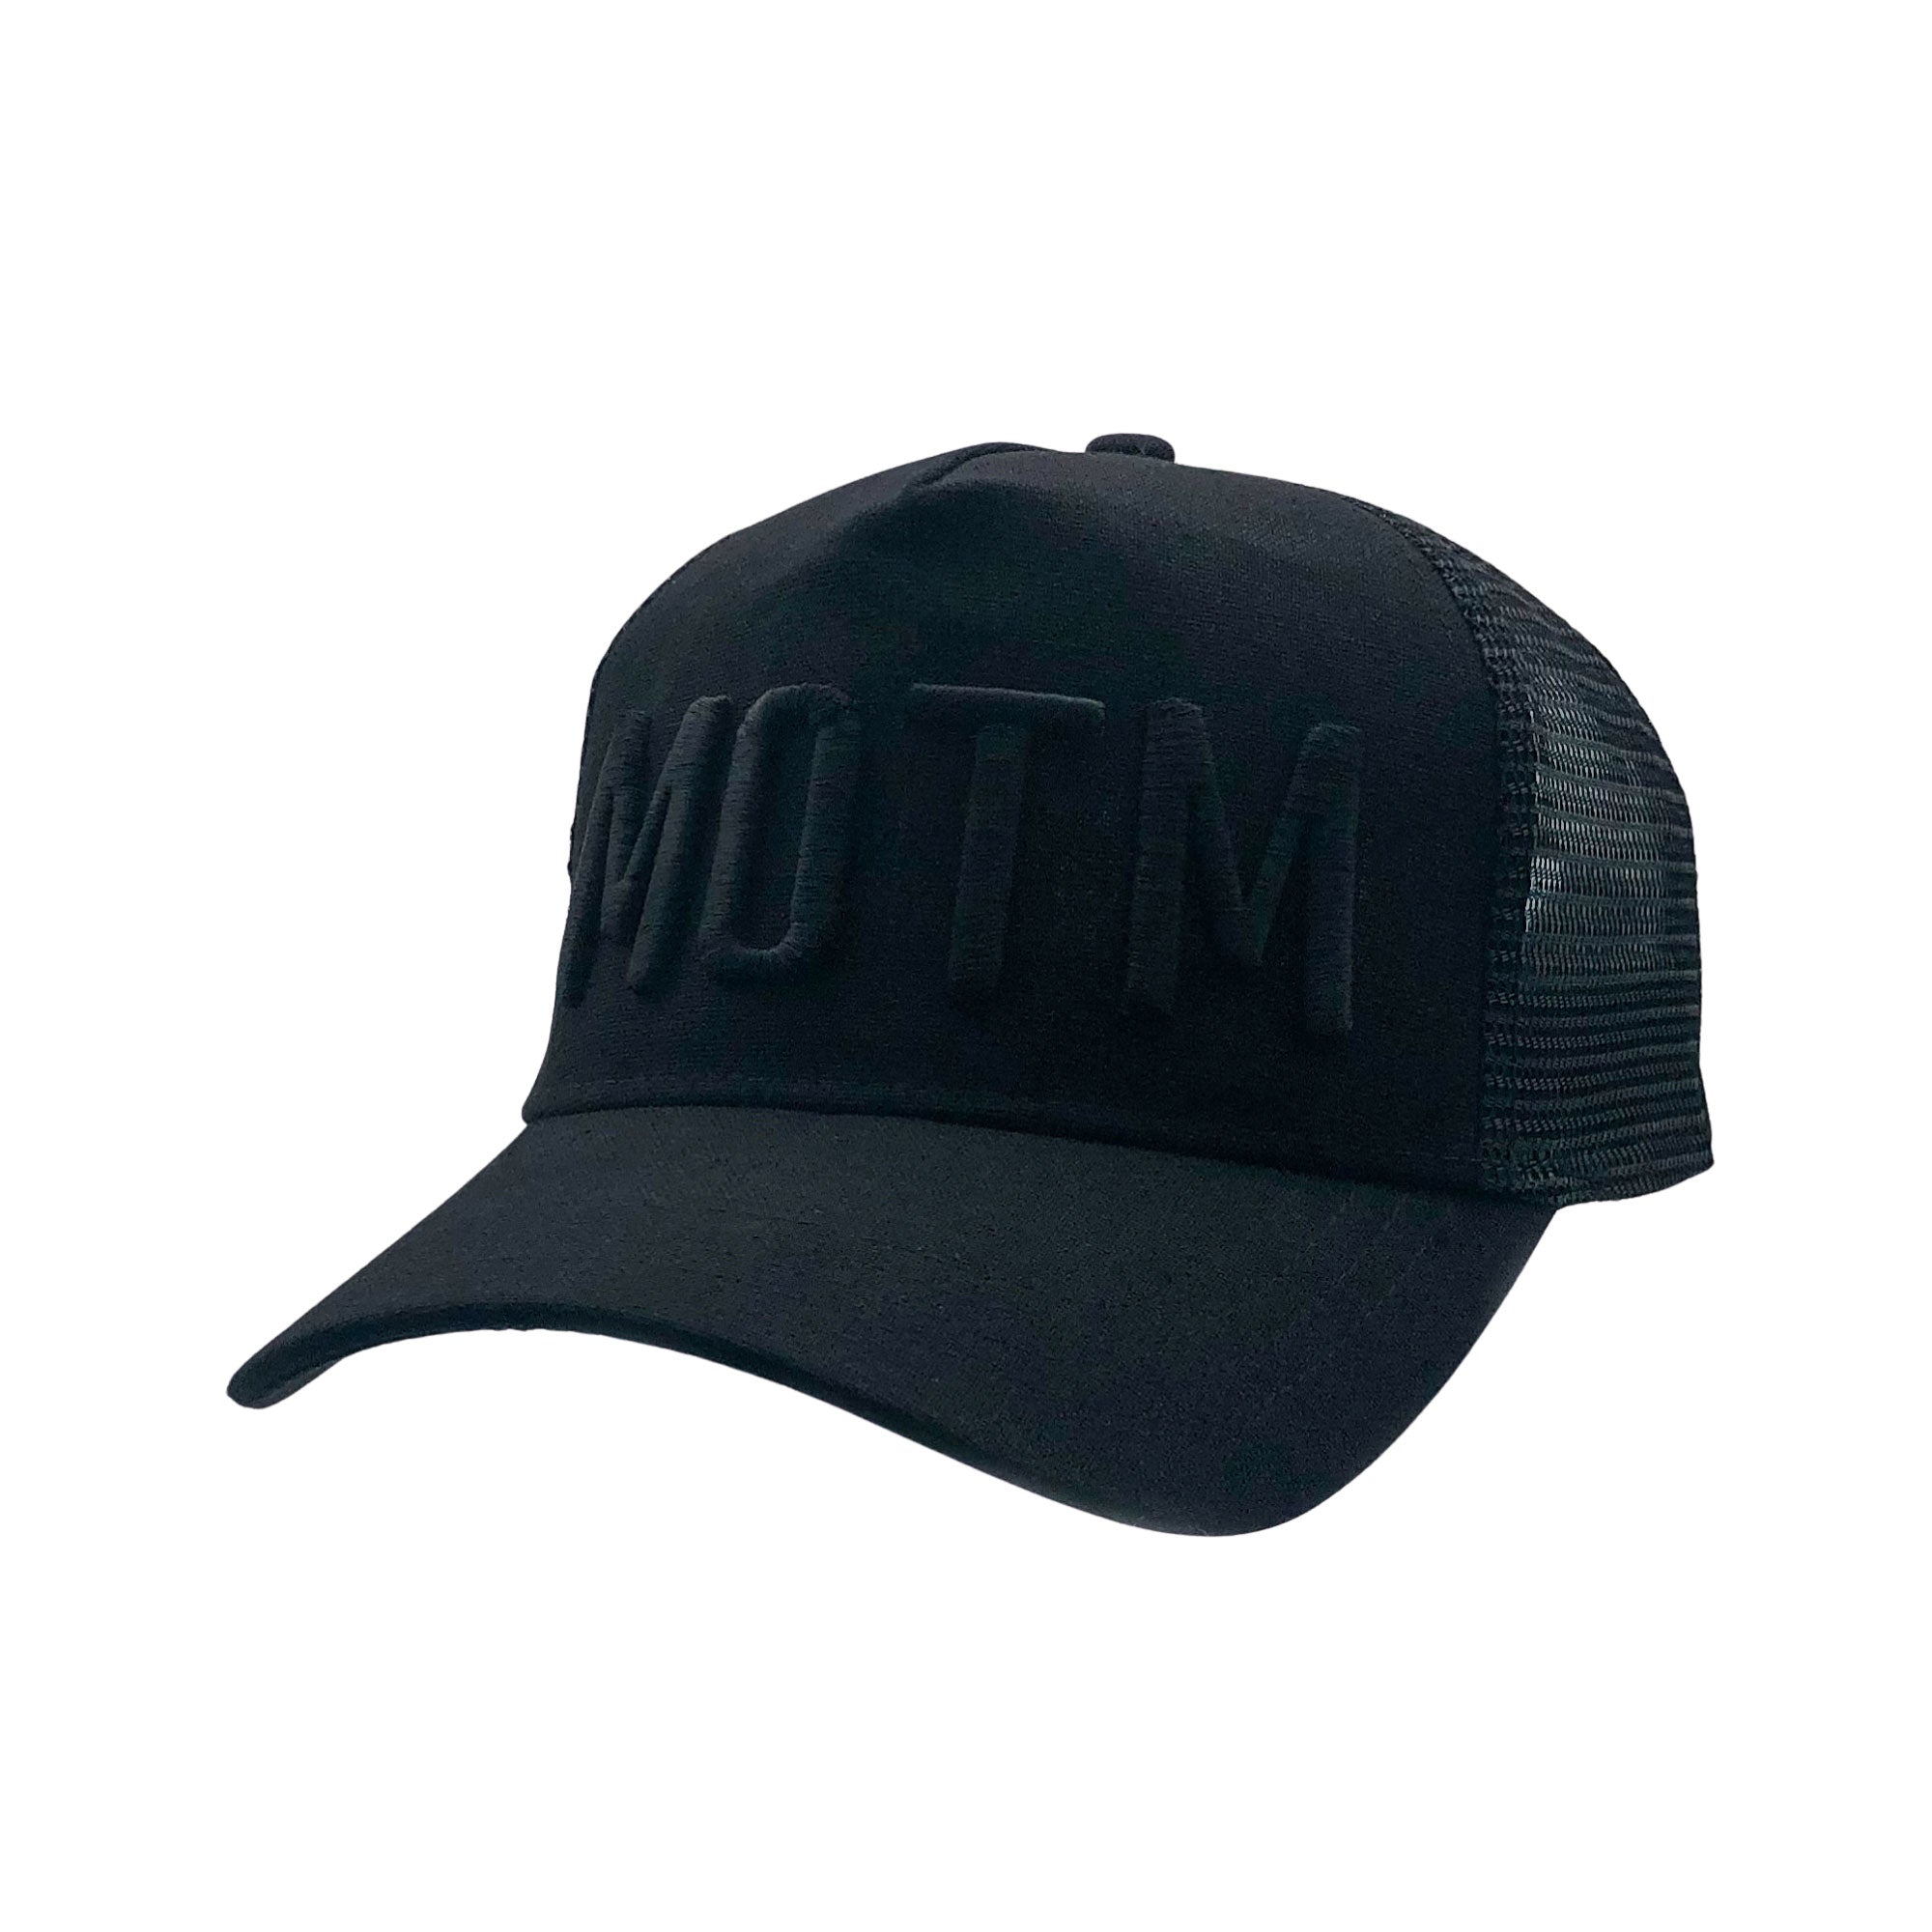 MAN OF THE MATCH® Official Cap - MOTM 3D Embroidered Black on Black - Premium Linen